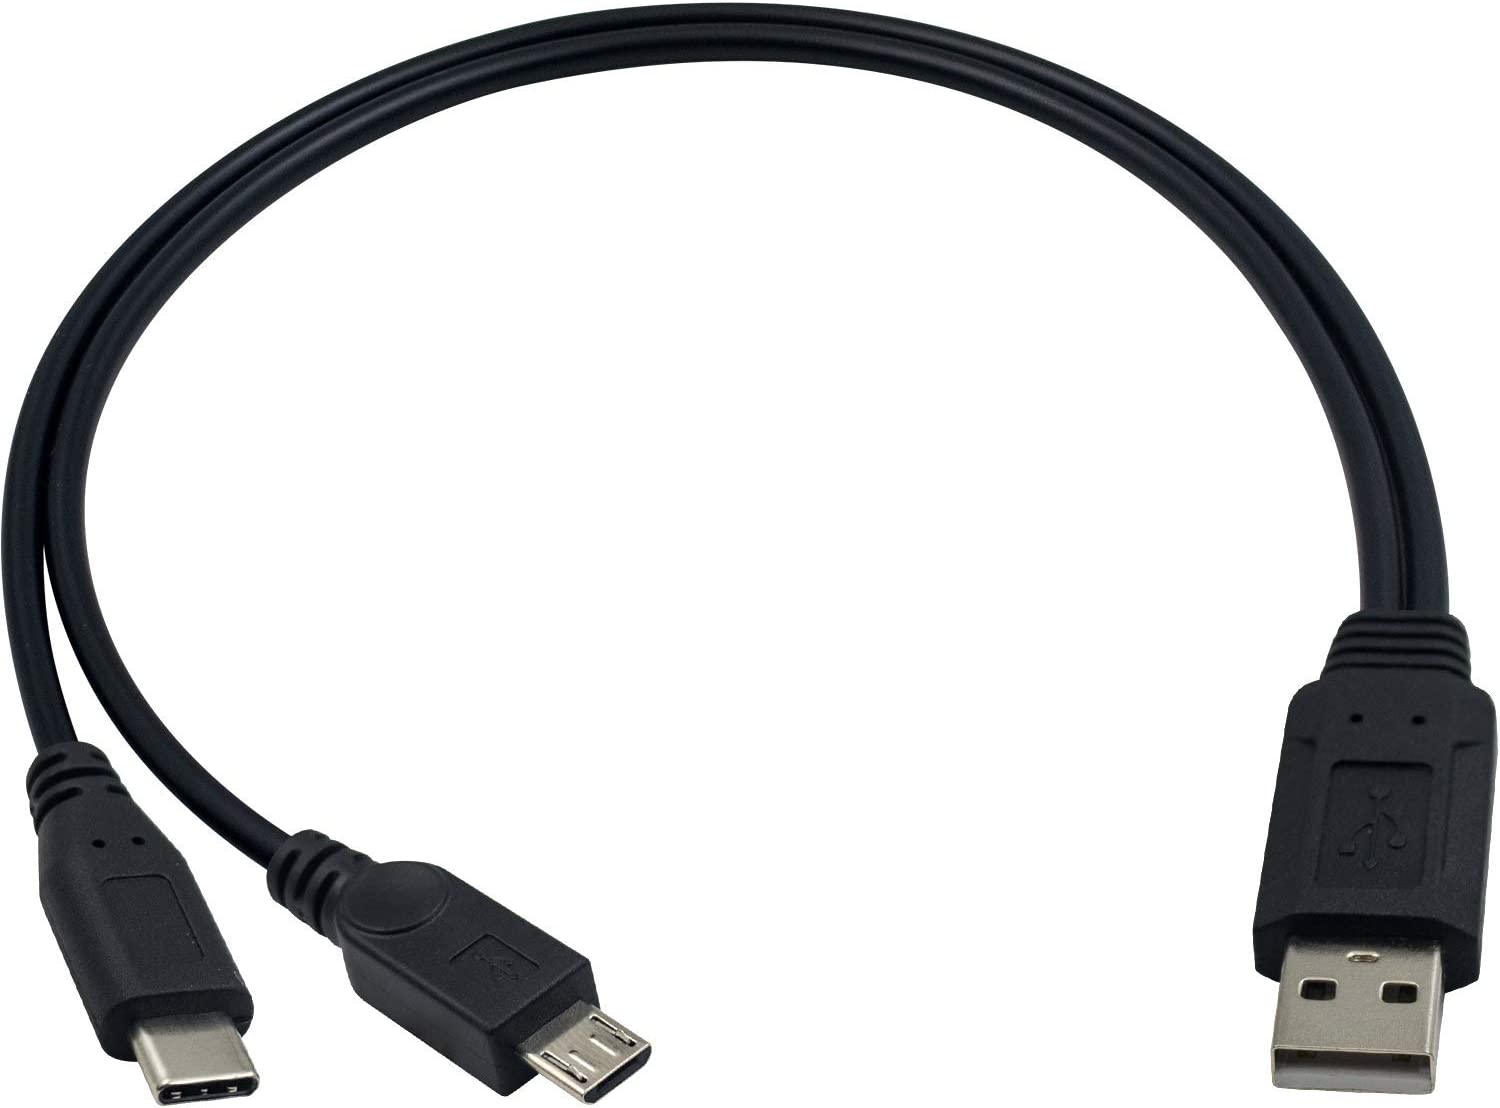 USB2.0電源補助ケーブル メス(USB2.0) オス(USB2.0 USB電源補助) 35cm 二股 2分岐ケーブル